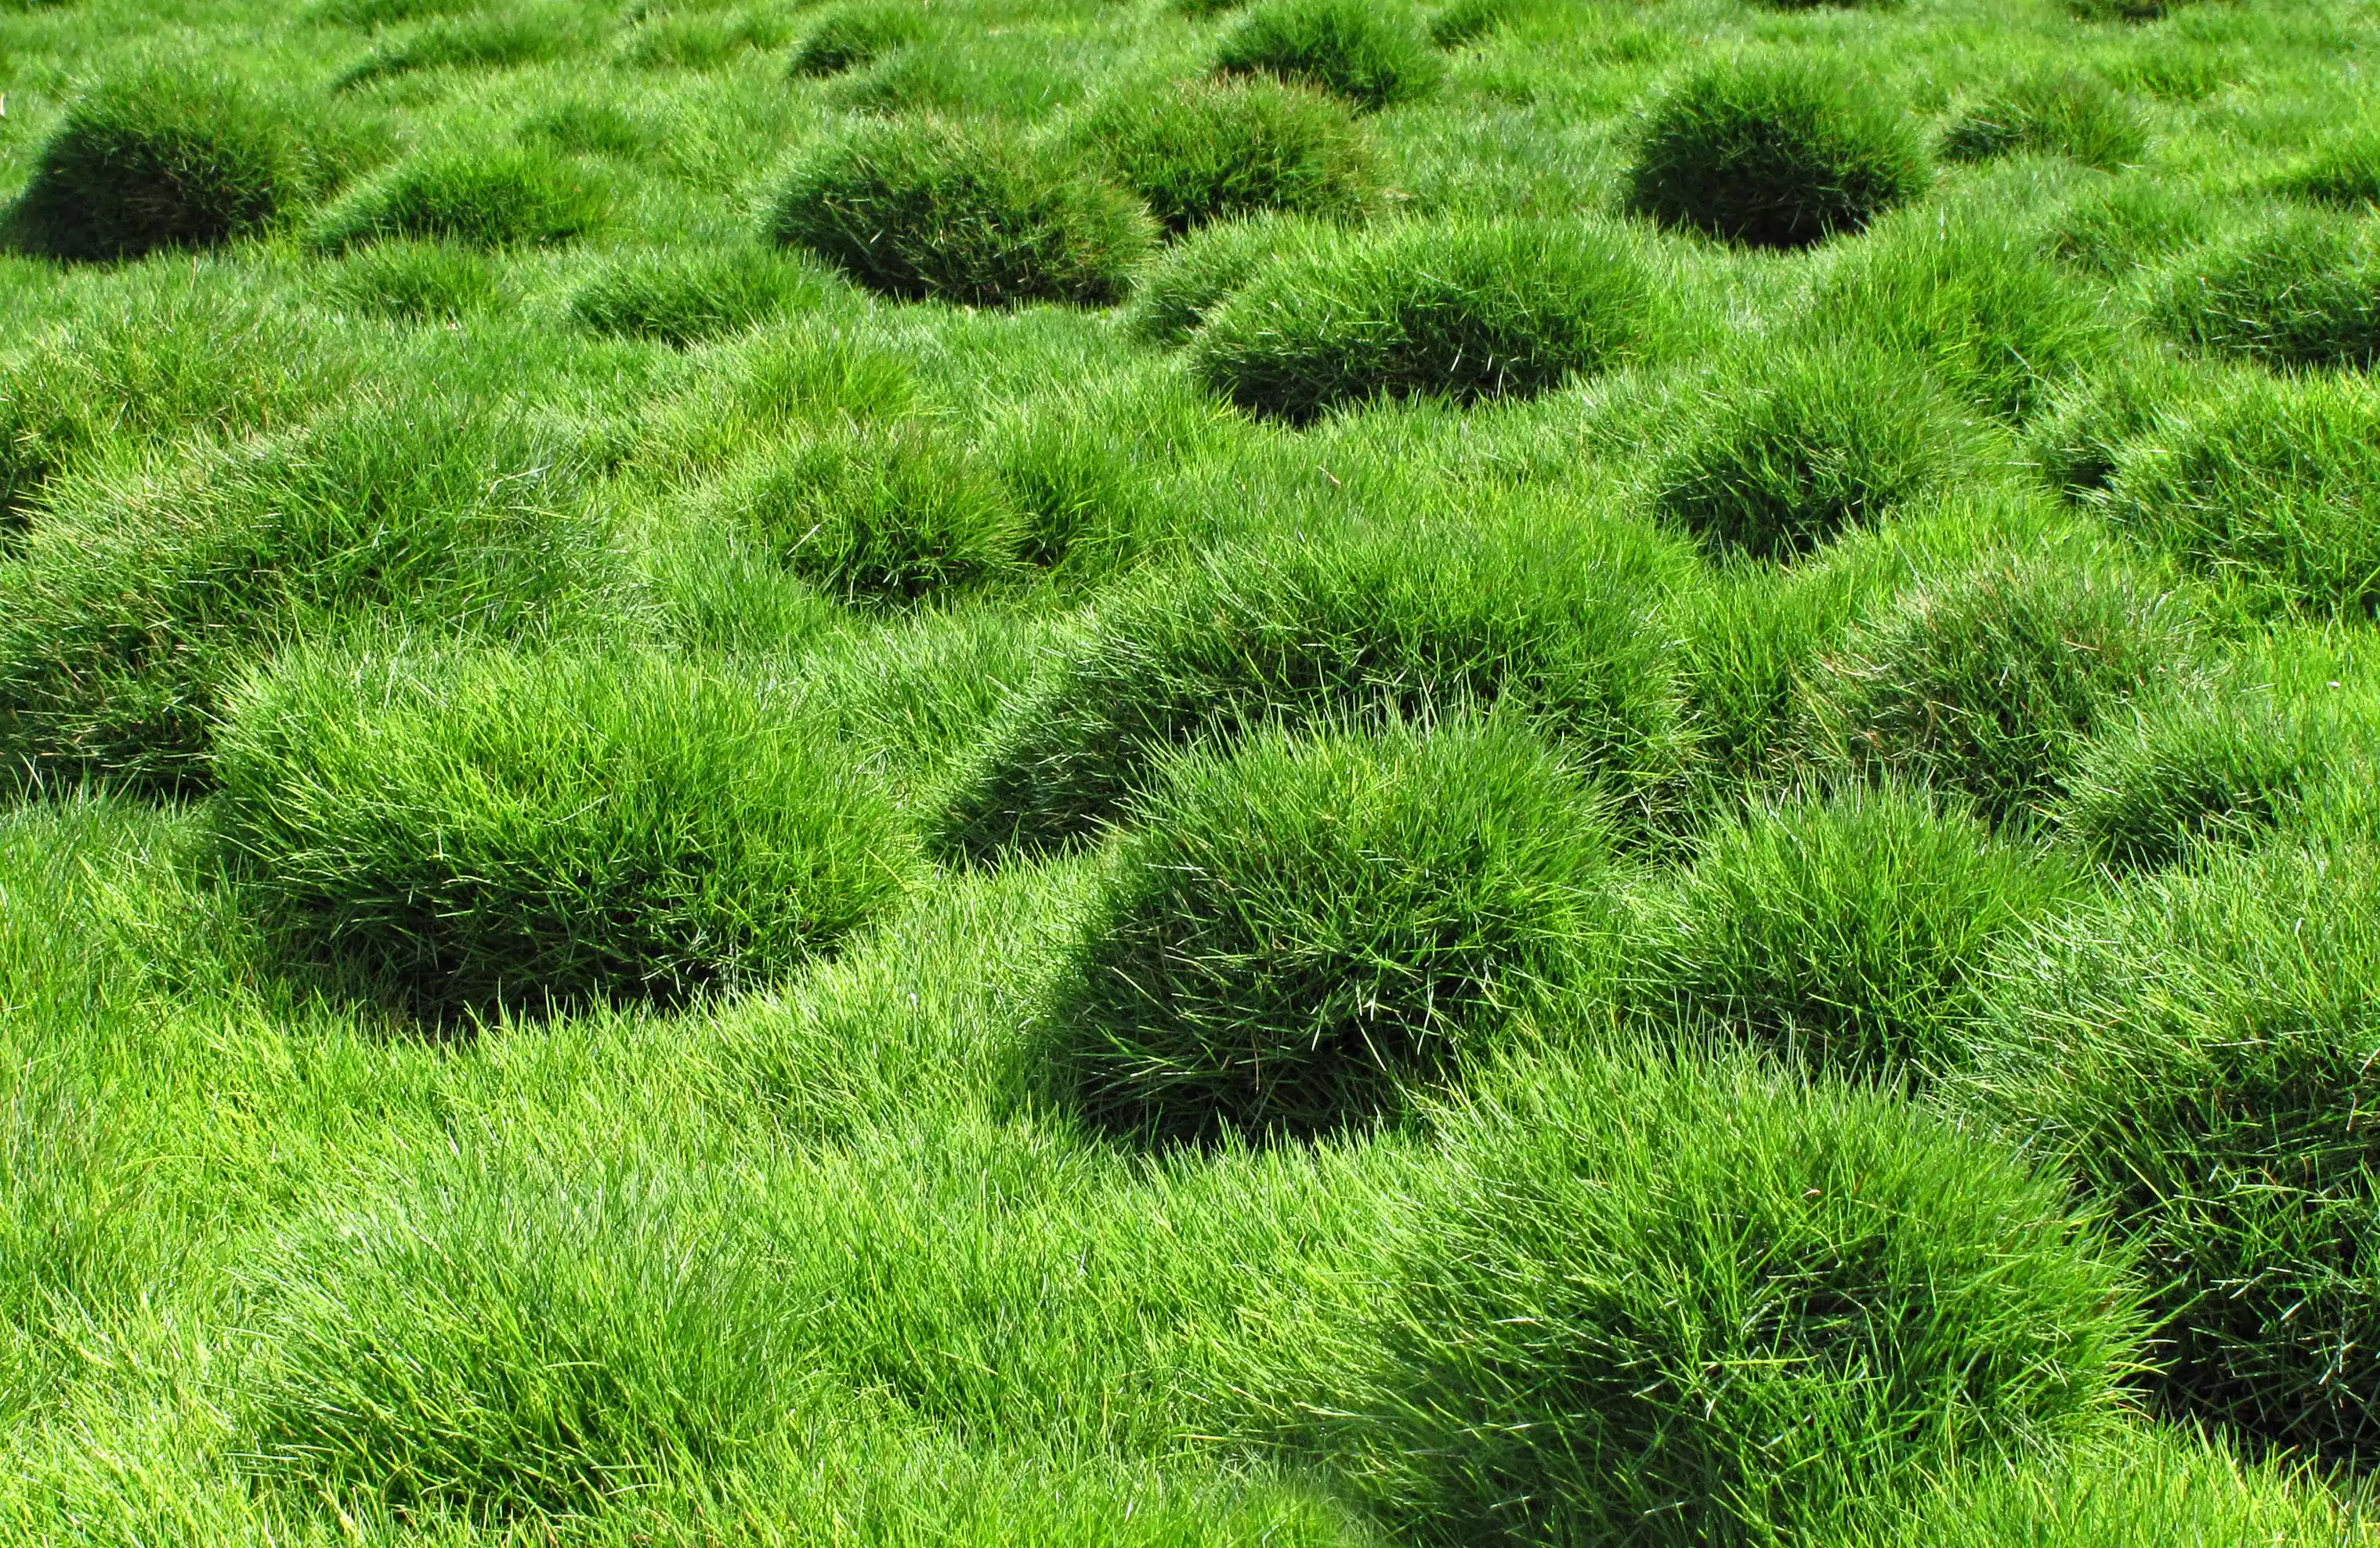 A field of bright green grass